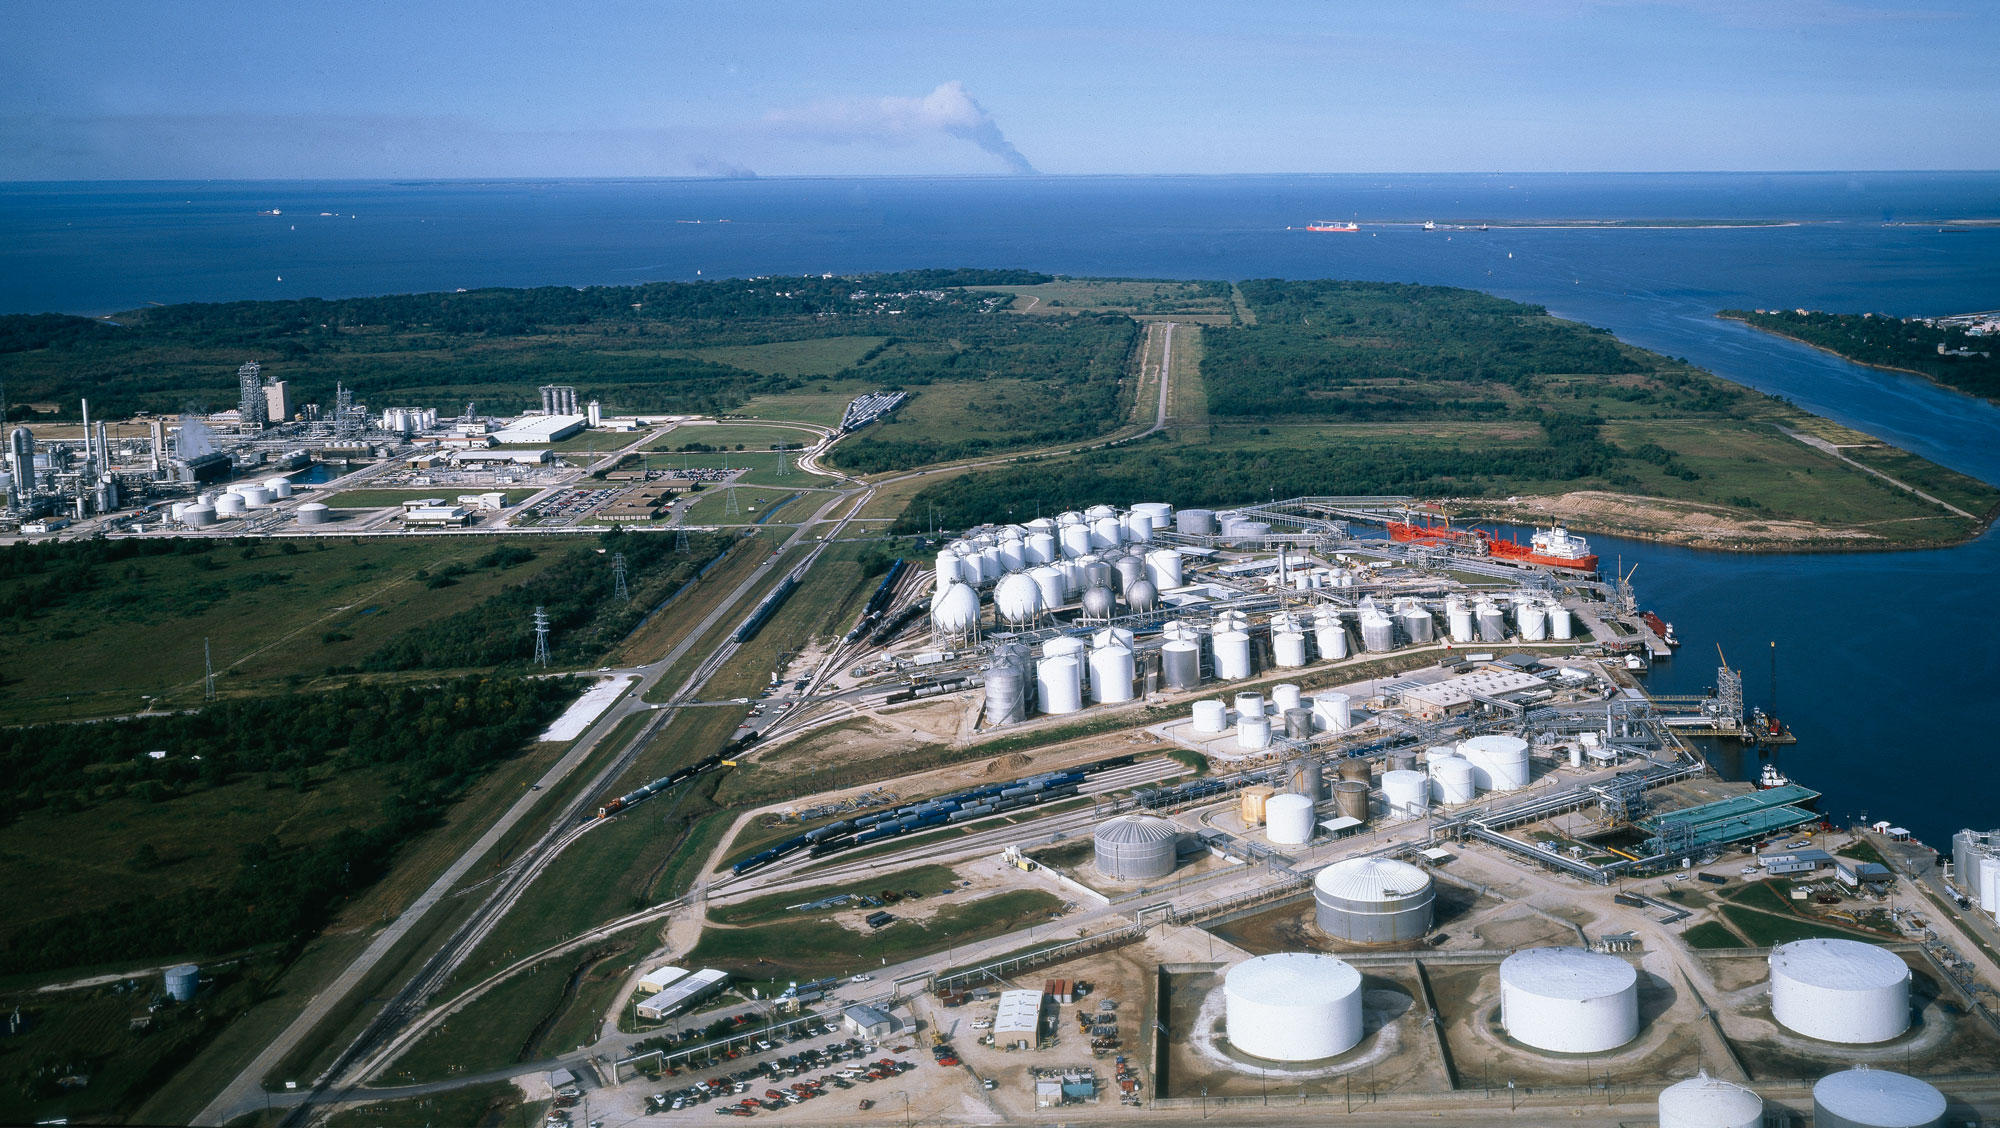 Aerial photograph of an oil refinery on the Texas Gulf Coast.